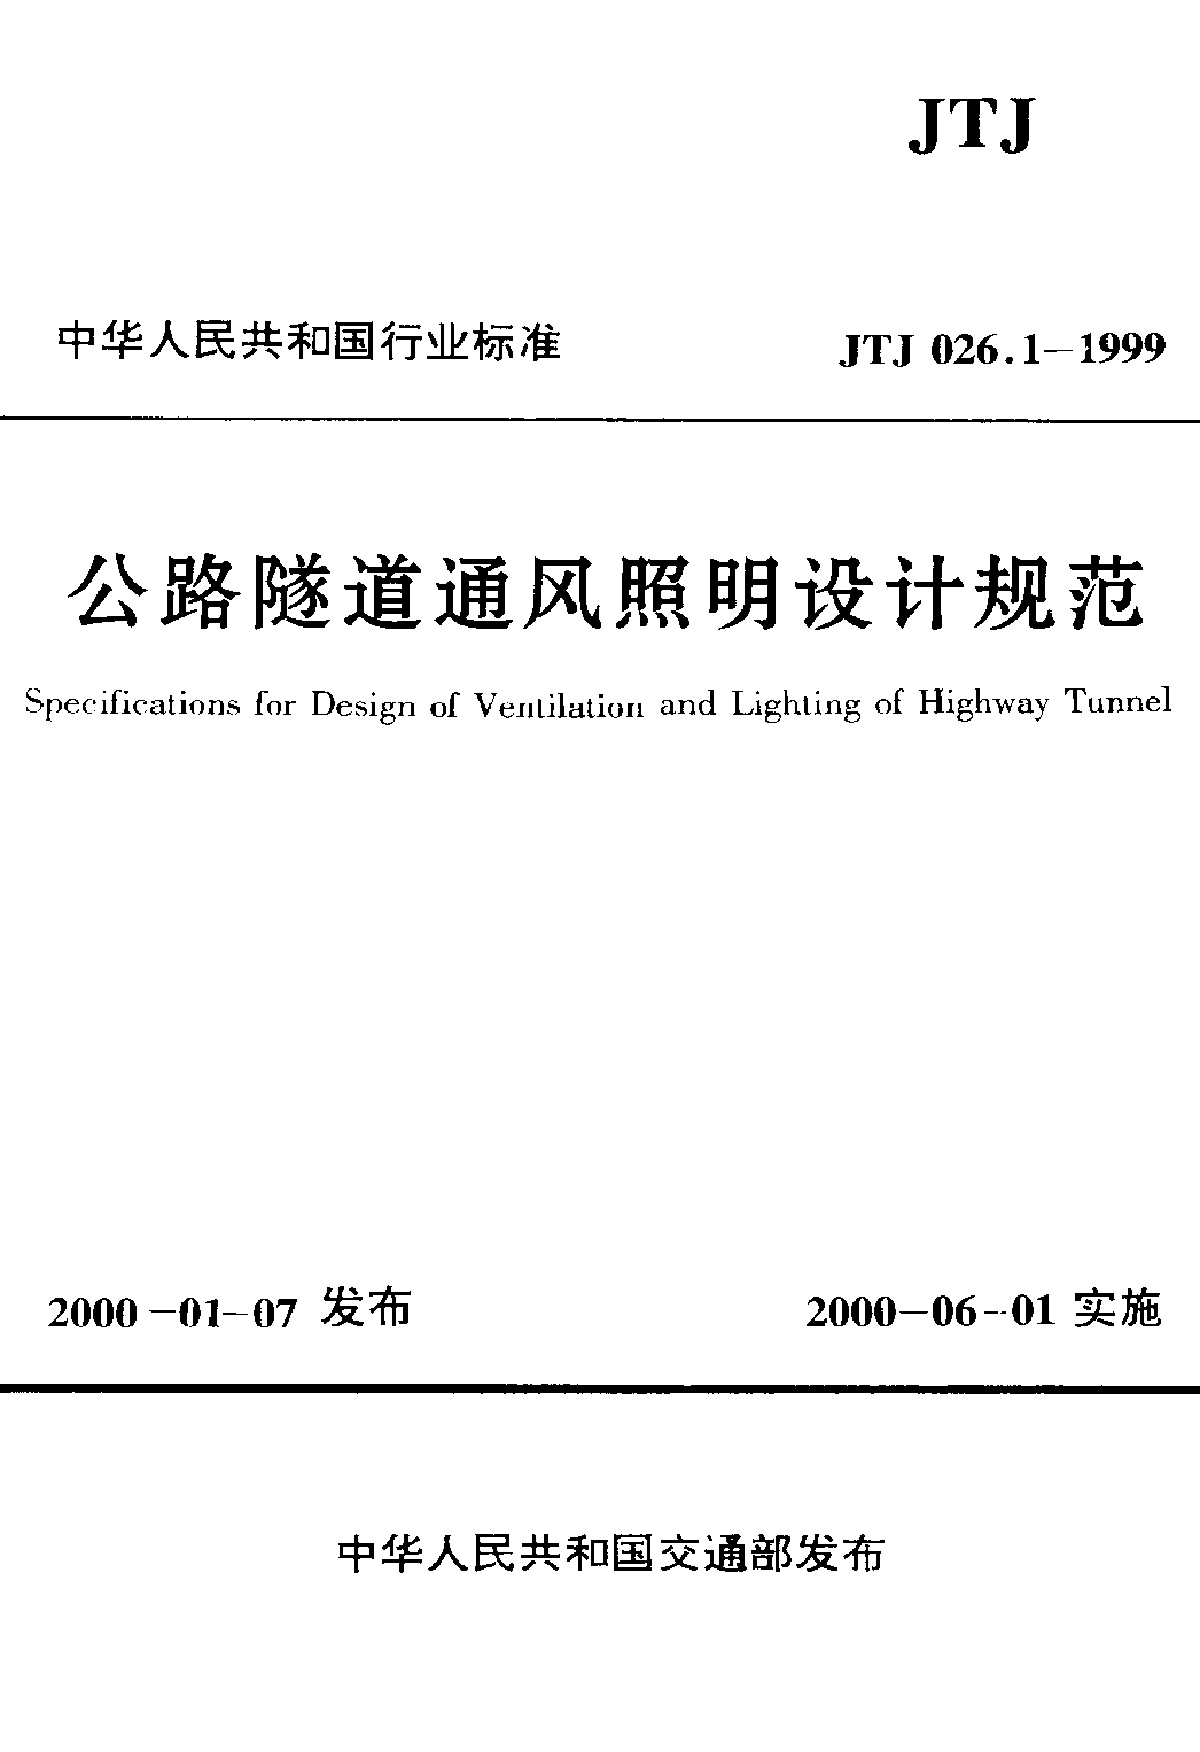 JTJ 026.1-1999 公路隧道通风照明设计规范